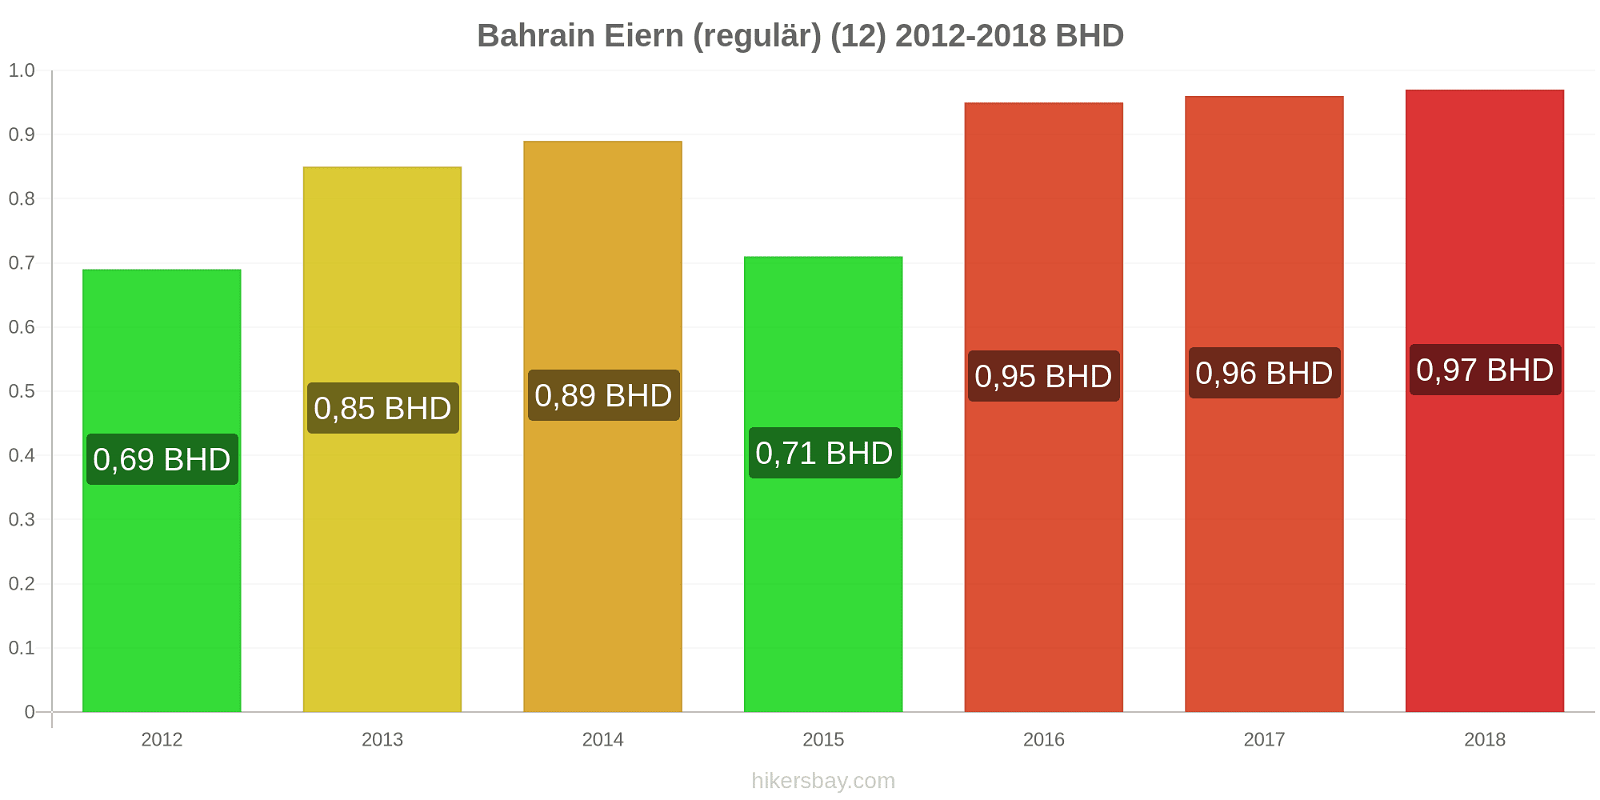 Bahrain Preisänderungen Eier (regelmäßig) (12) hikersbay.com